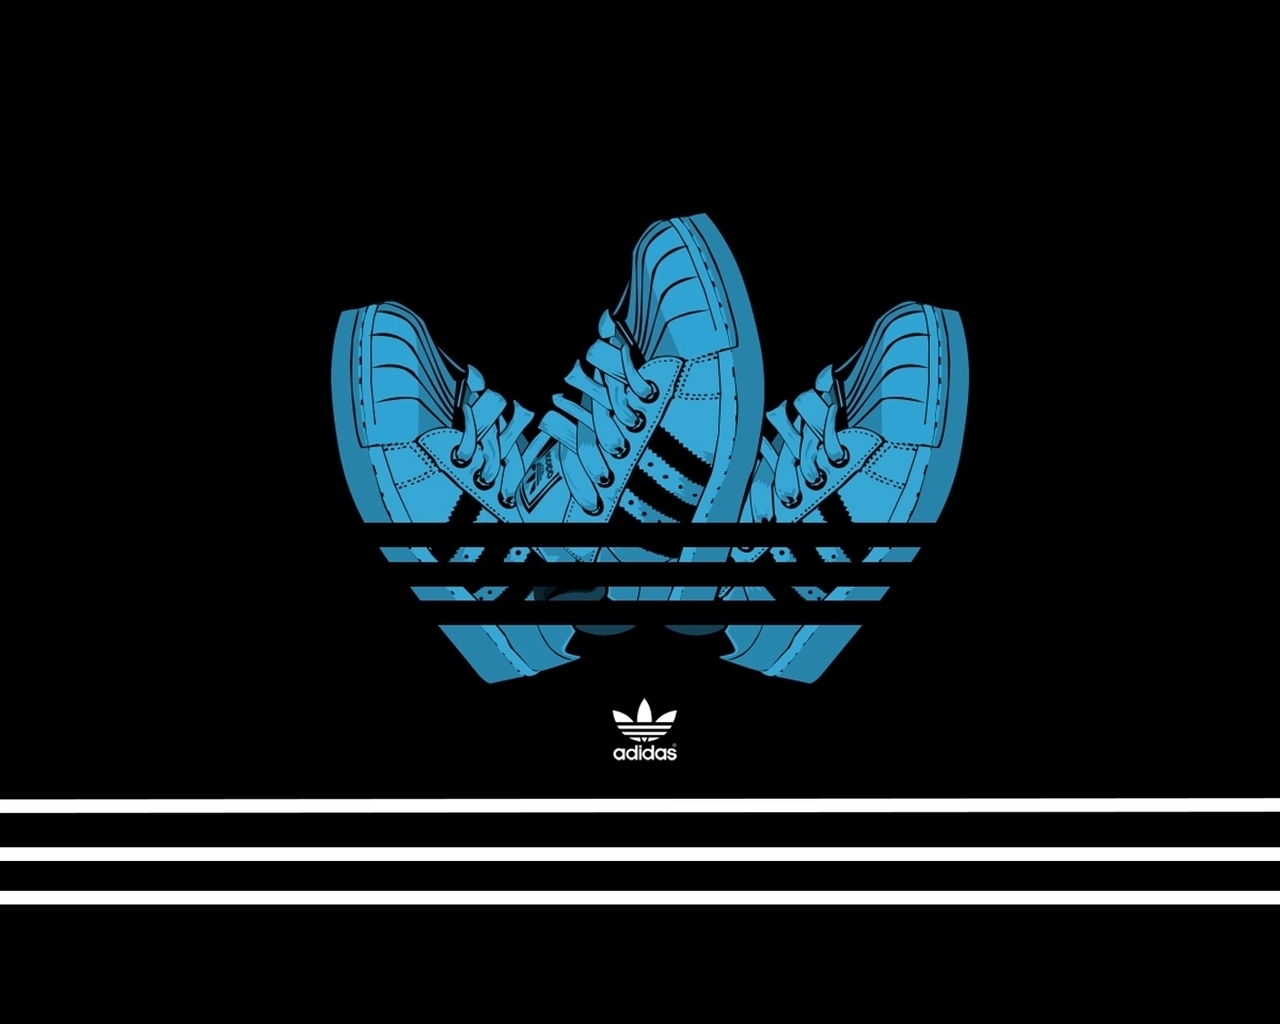 Adidas Creative Logo Design for 1280 x 1024 resolution